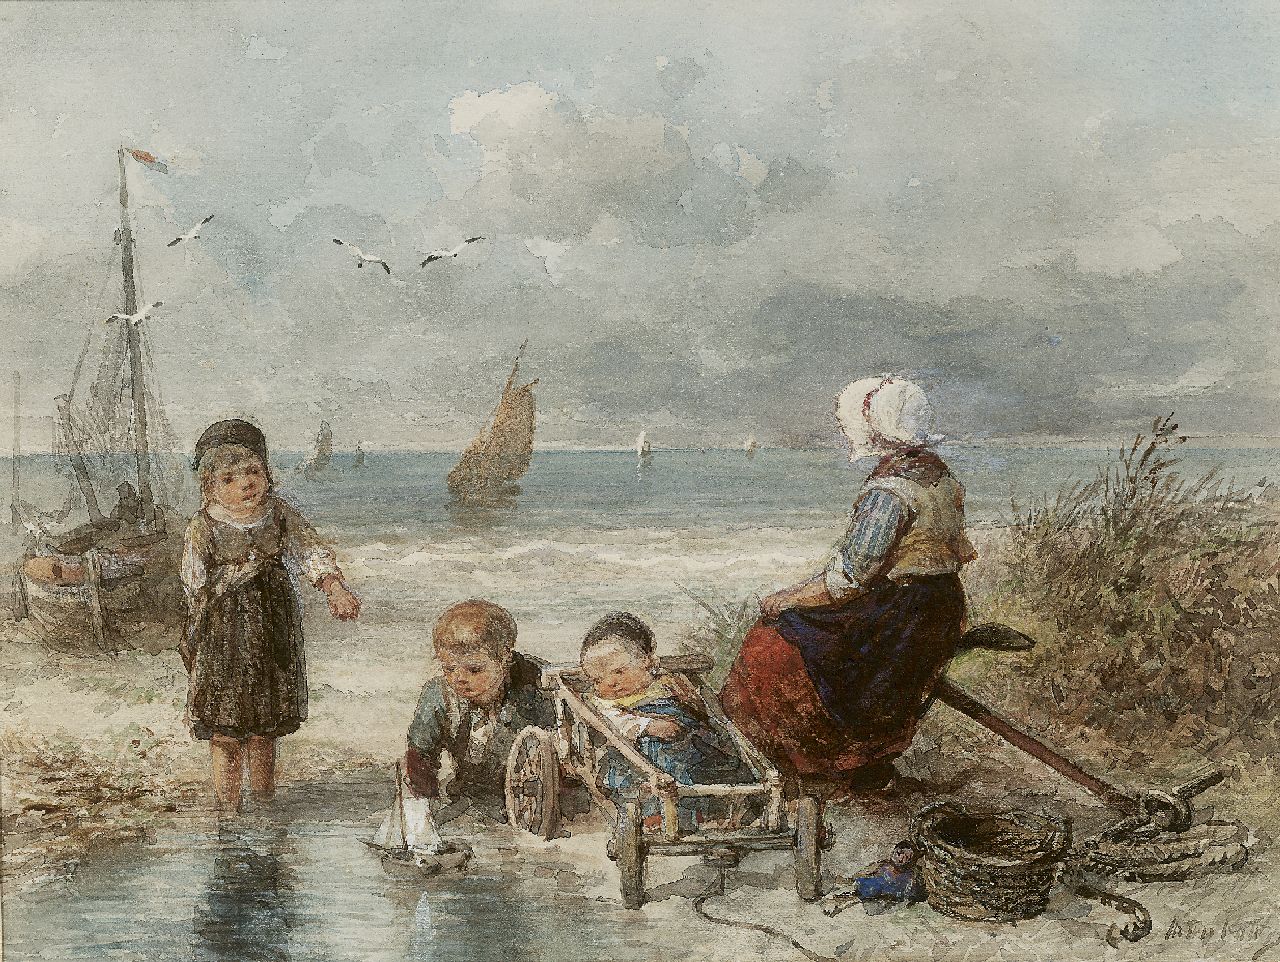 Kate J.M.H. ten | Johan 'Mari' Henri ten Kate, Fisherman's wife and her children on the beach, watercolour on paper 20.6 x 28.3 cm, signed l.r.